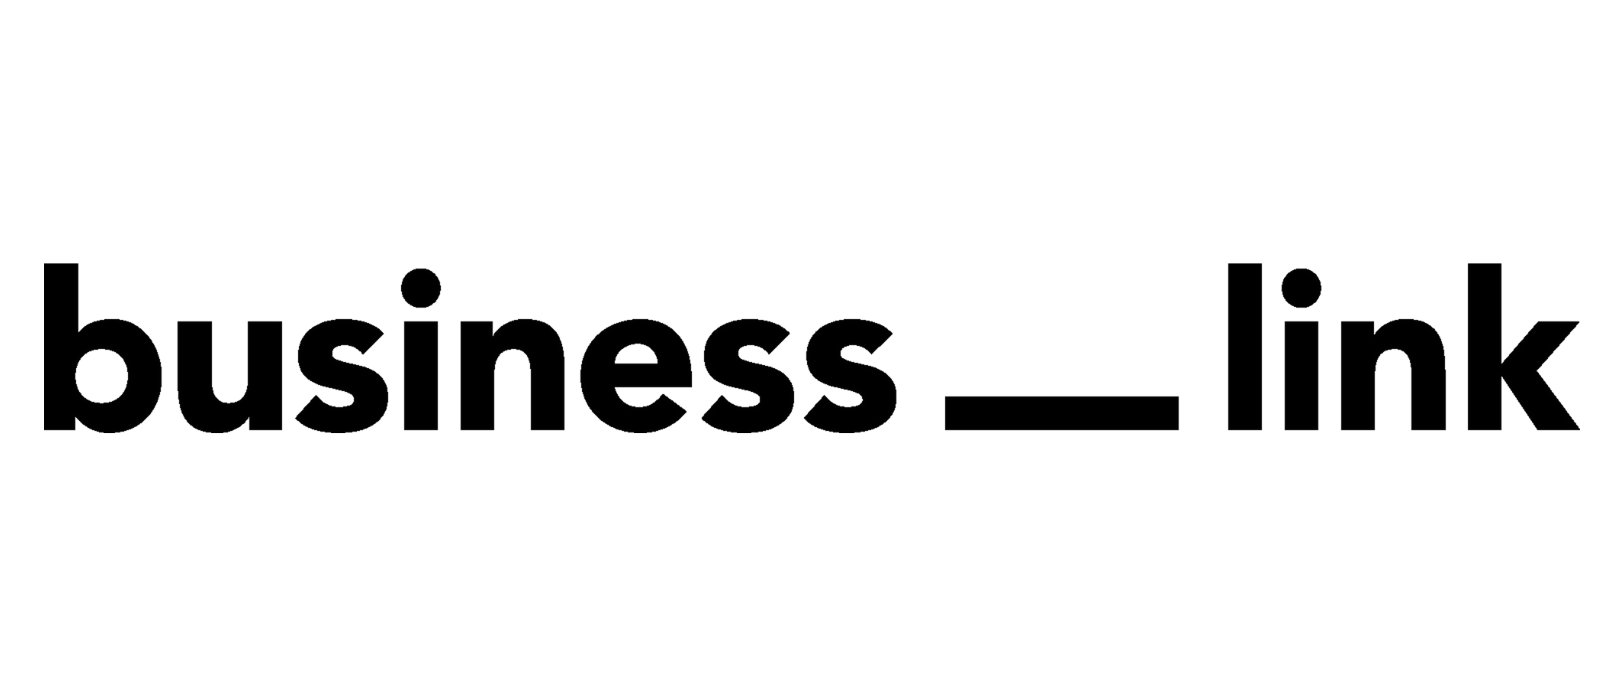 business link logo strona